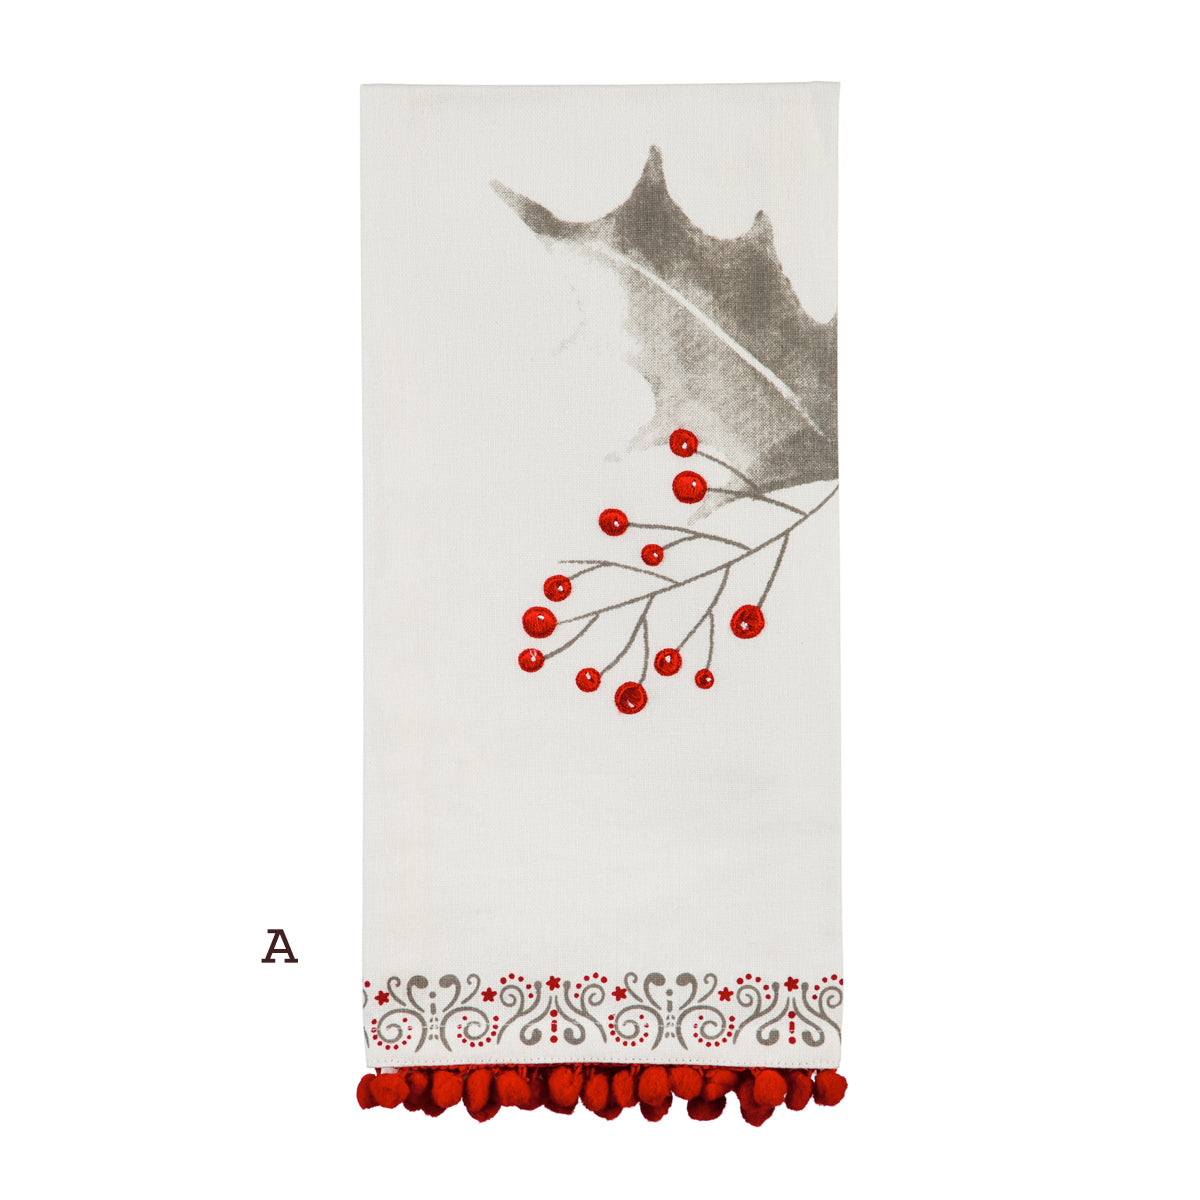 Yuletide Tea Towel, Set of 2, 4 designs